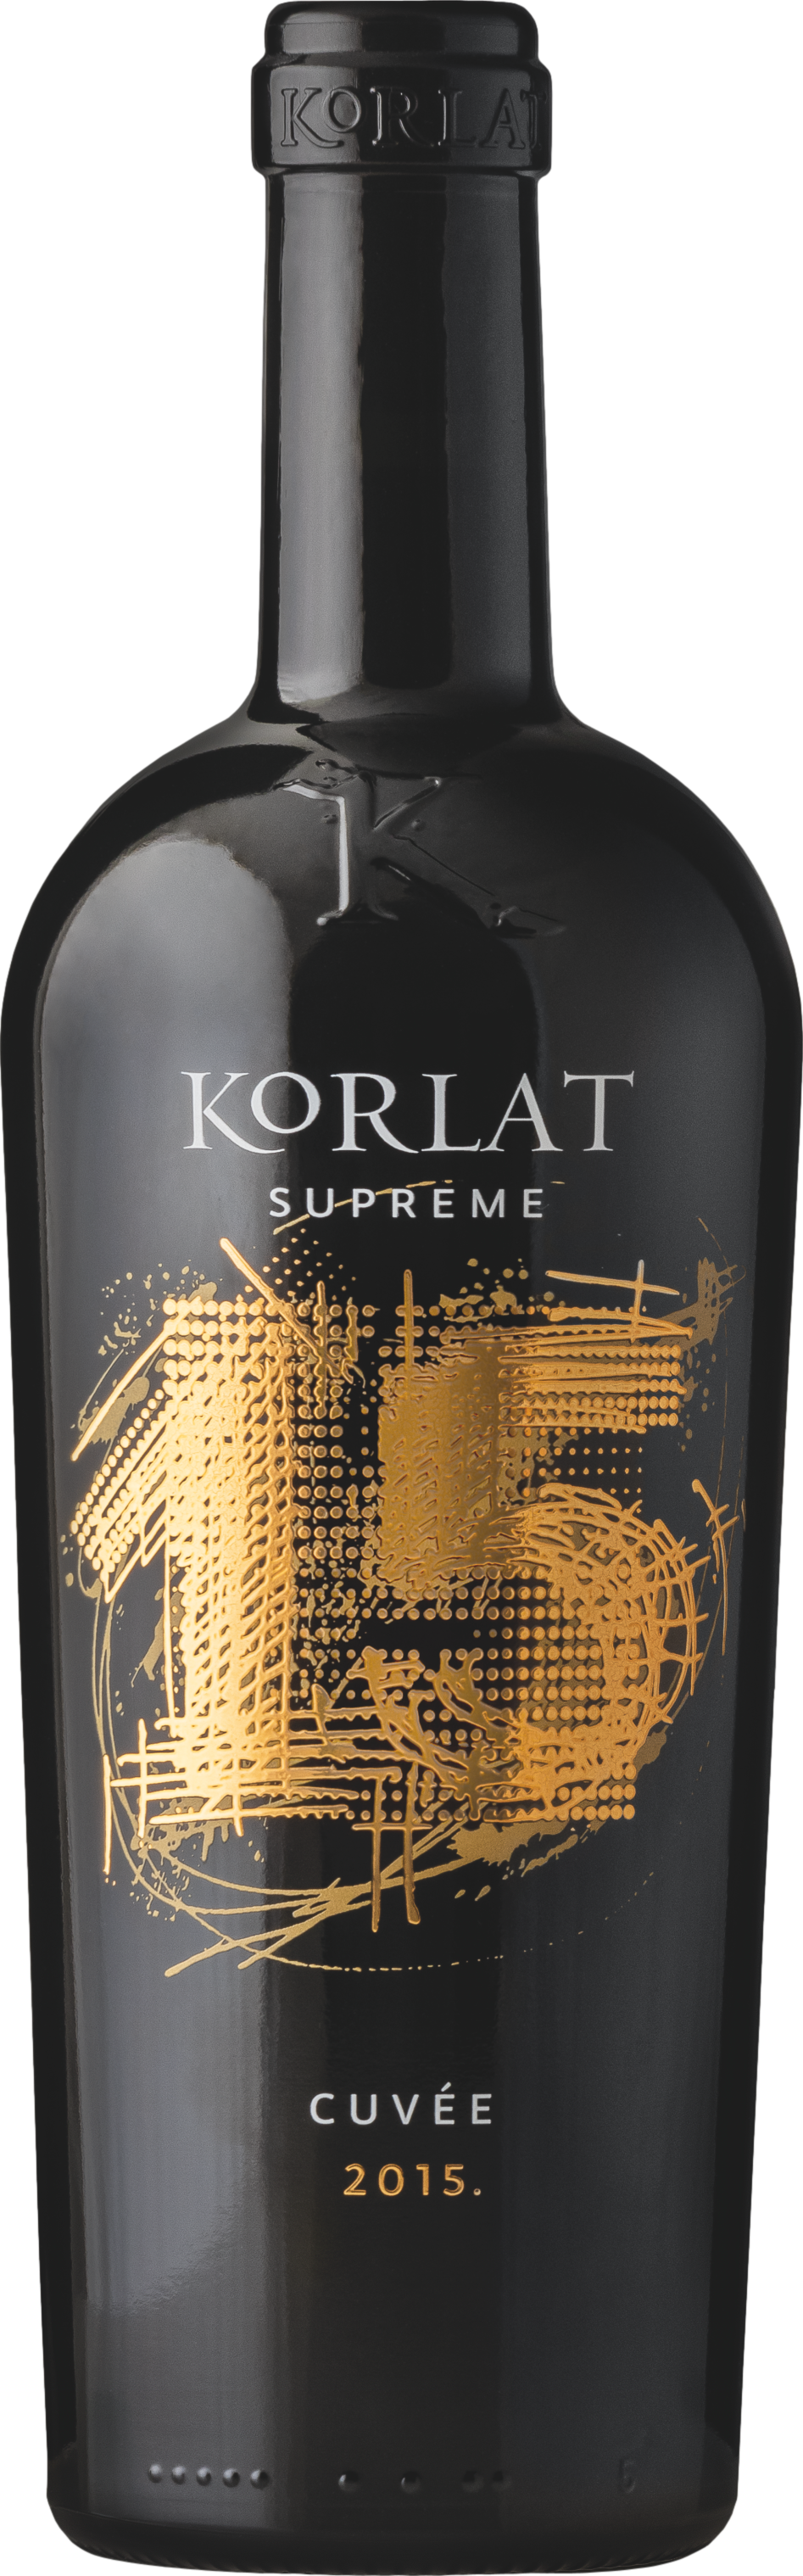 Korlat Supreme Cuvee 2015 Badel 1862 8wines DACH